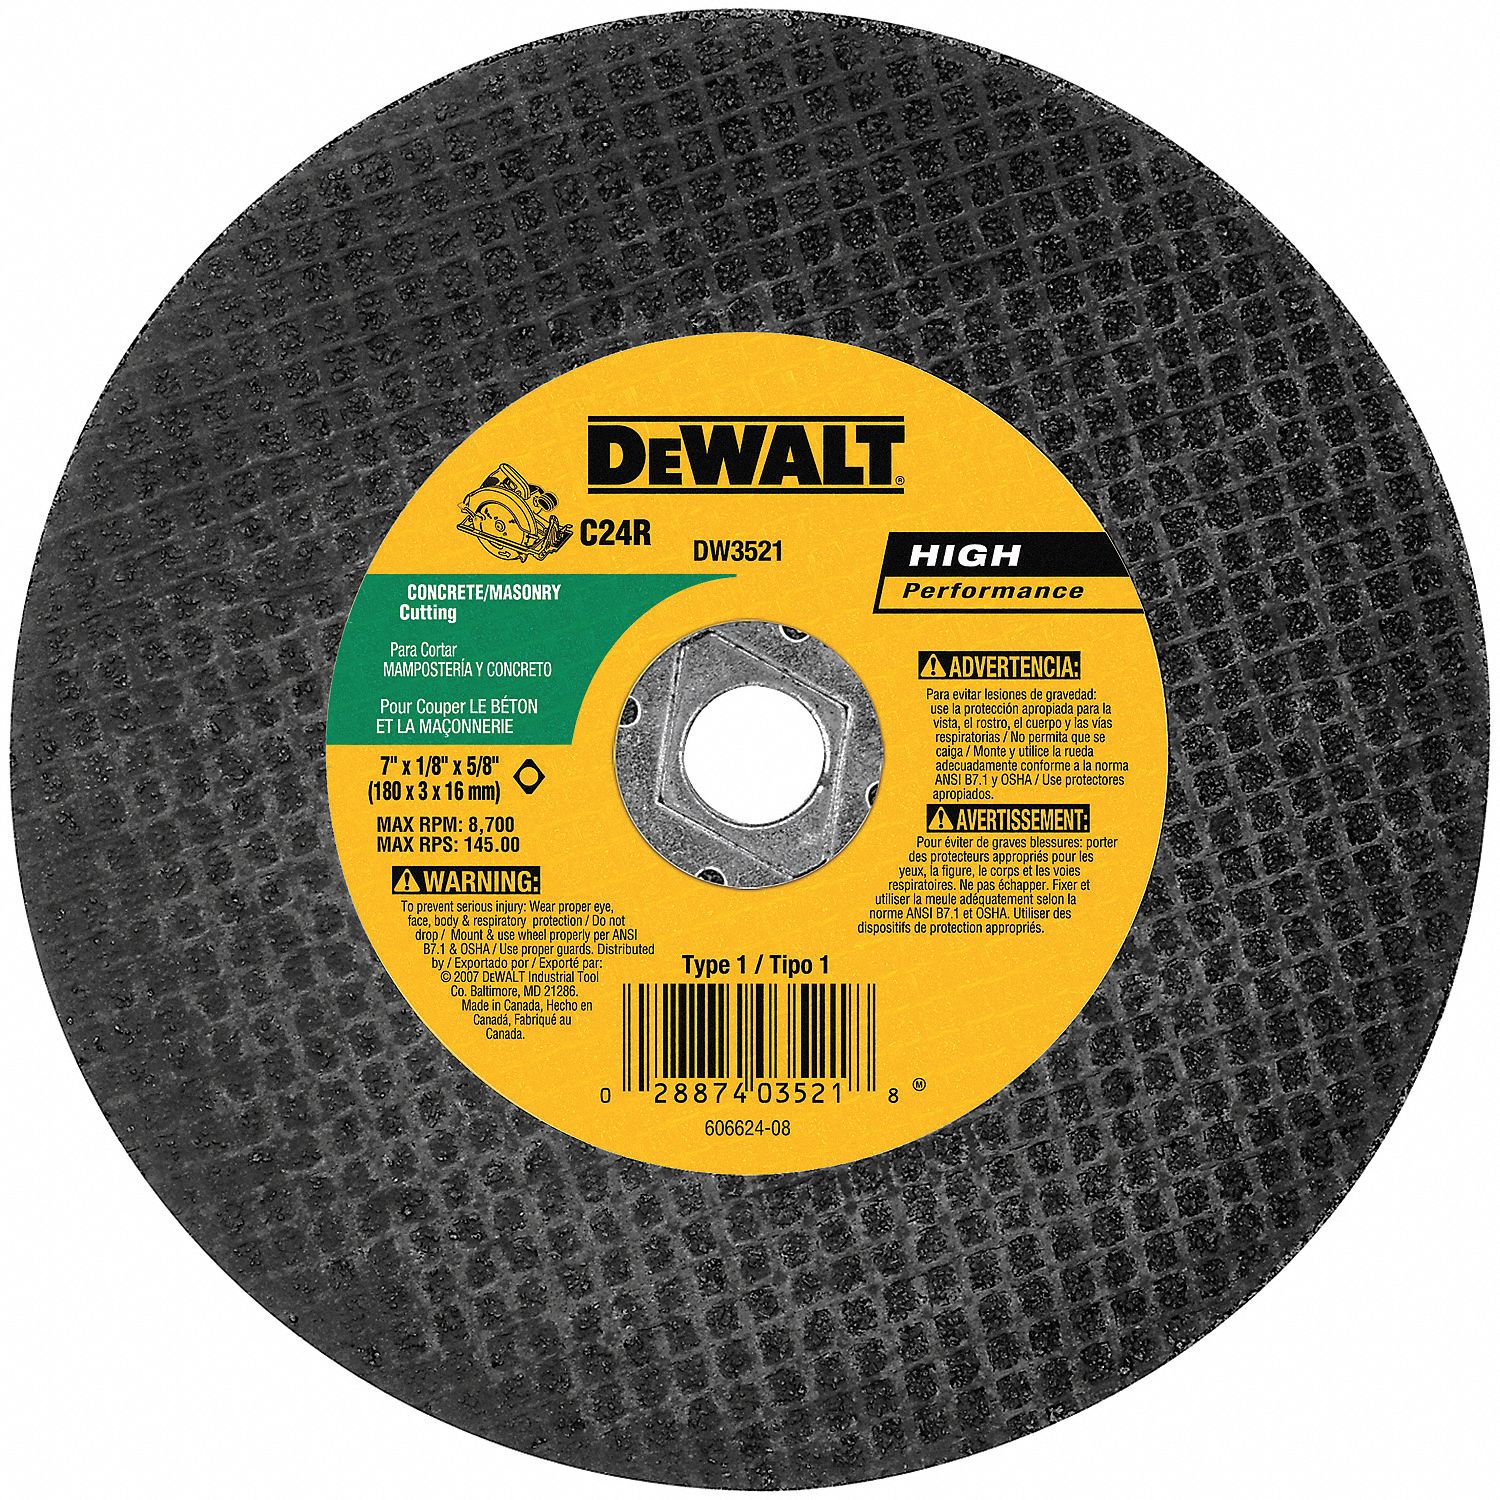 DEWALT Disco de Corte Abrasivo High Performance 7" Grano 24 para Concreto, Mampostería y Asfalto - Ruedas Abrasivas Corte y Desabaste - 6TMT1 | DW3521 - Grainger México